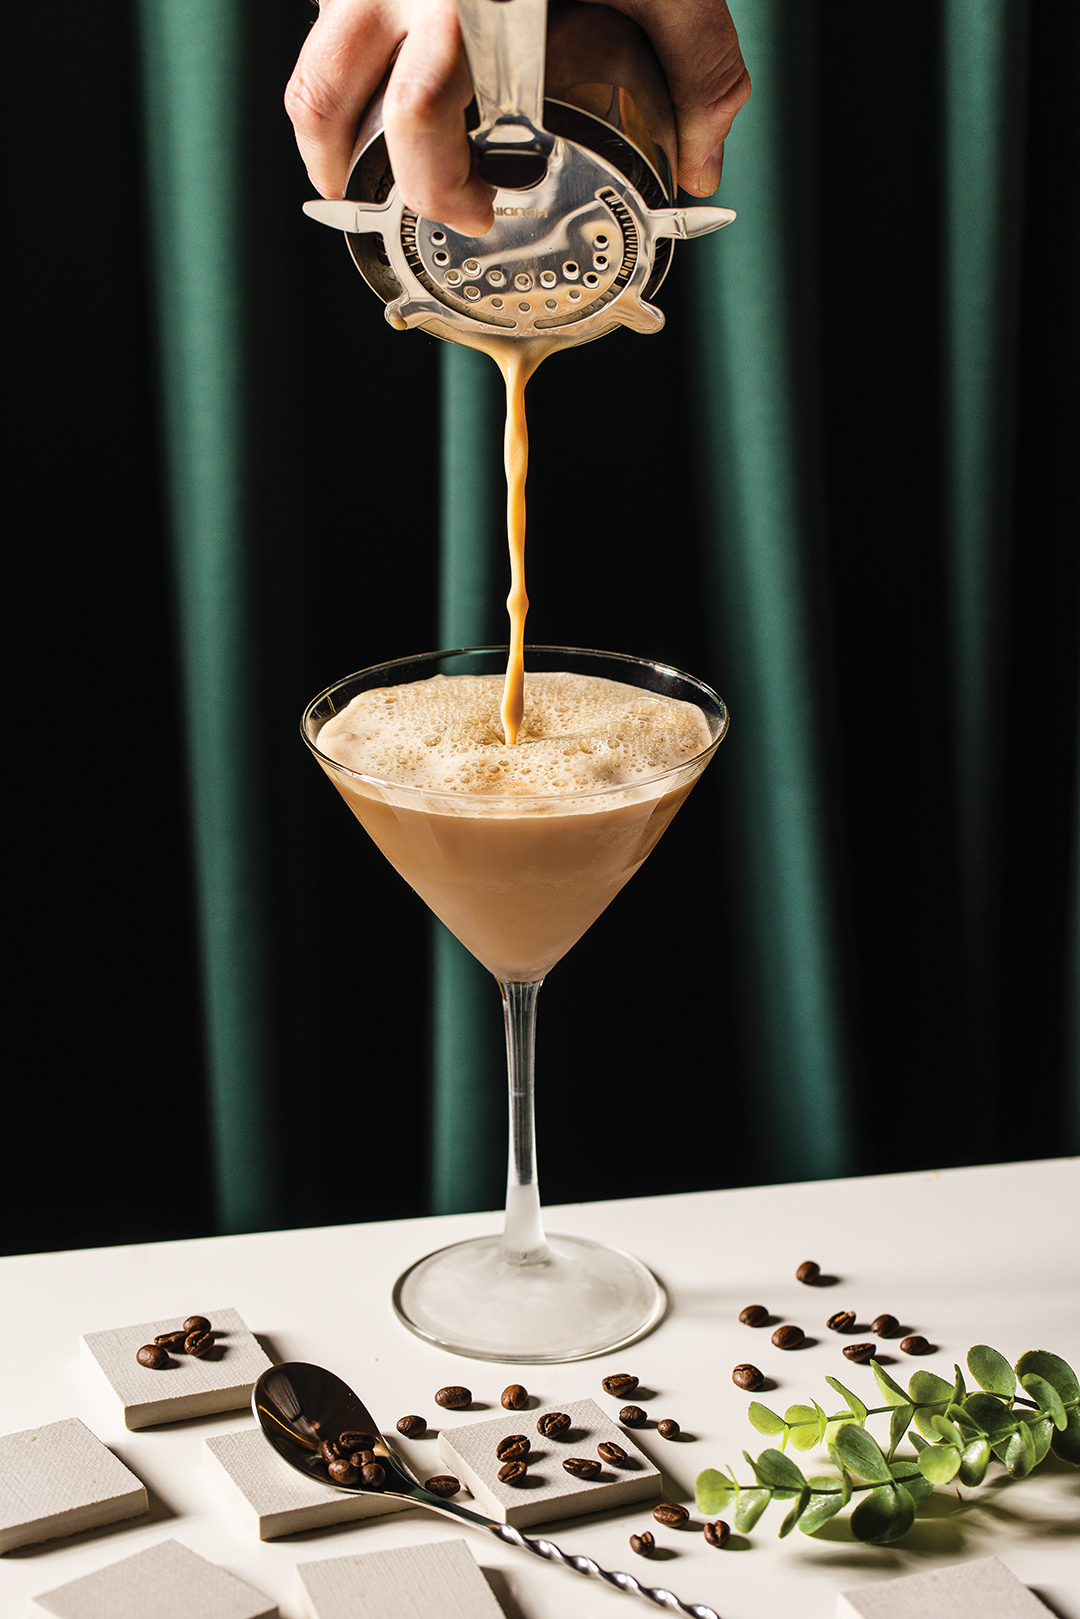 Hand pours an espresso martini into a glass.